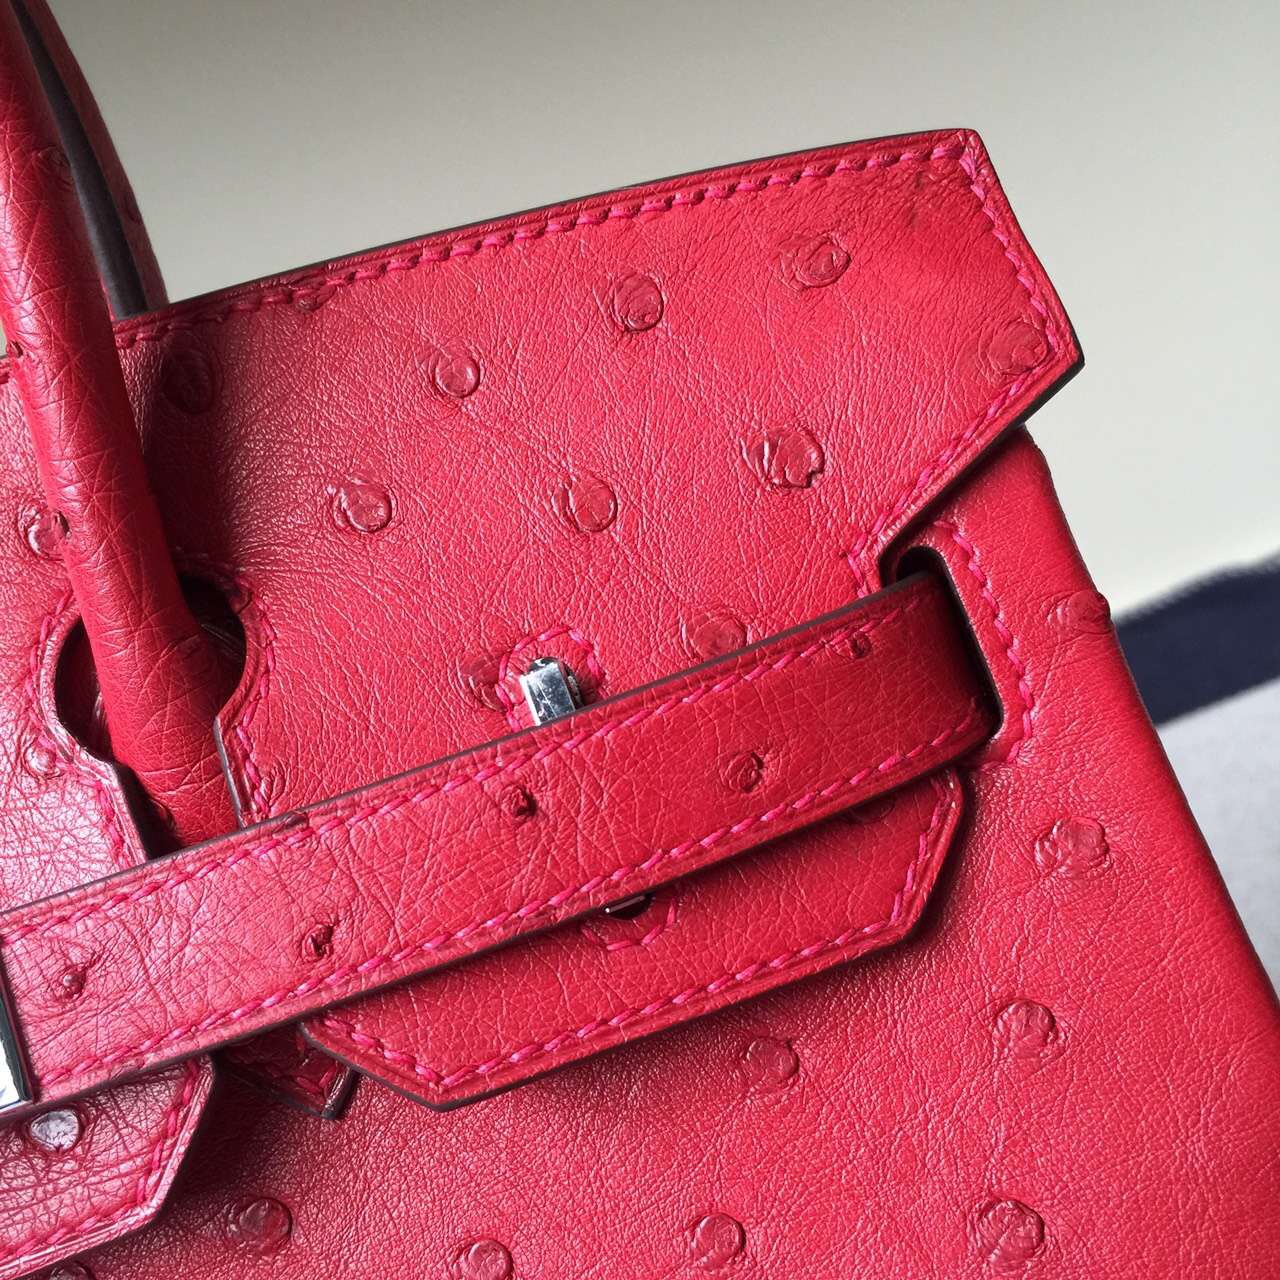 Discount Hermes Ostrich Leather Birkin30cm Bag in Q5 Rouge Casaque